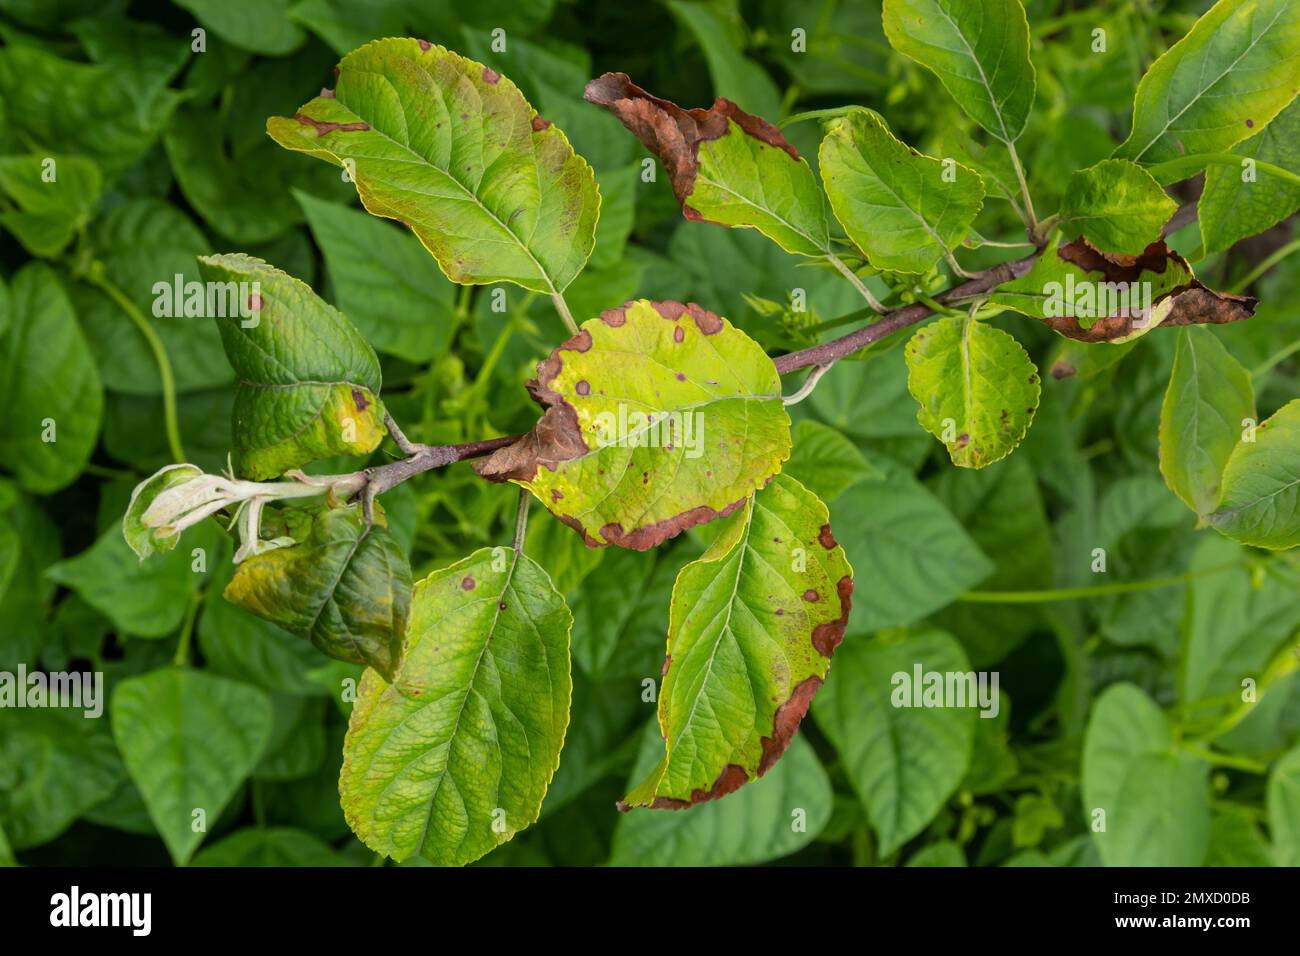 Rosige Apfelblattläuse, Dysaphis devecta, Apfelpest. Detail des betroffenen Blatts. Stockfoto